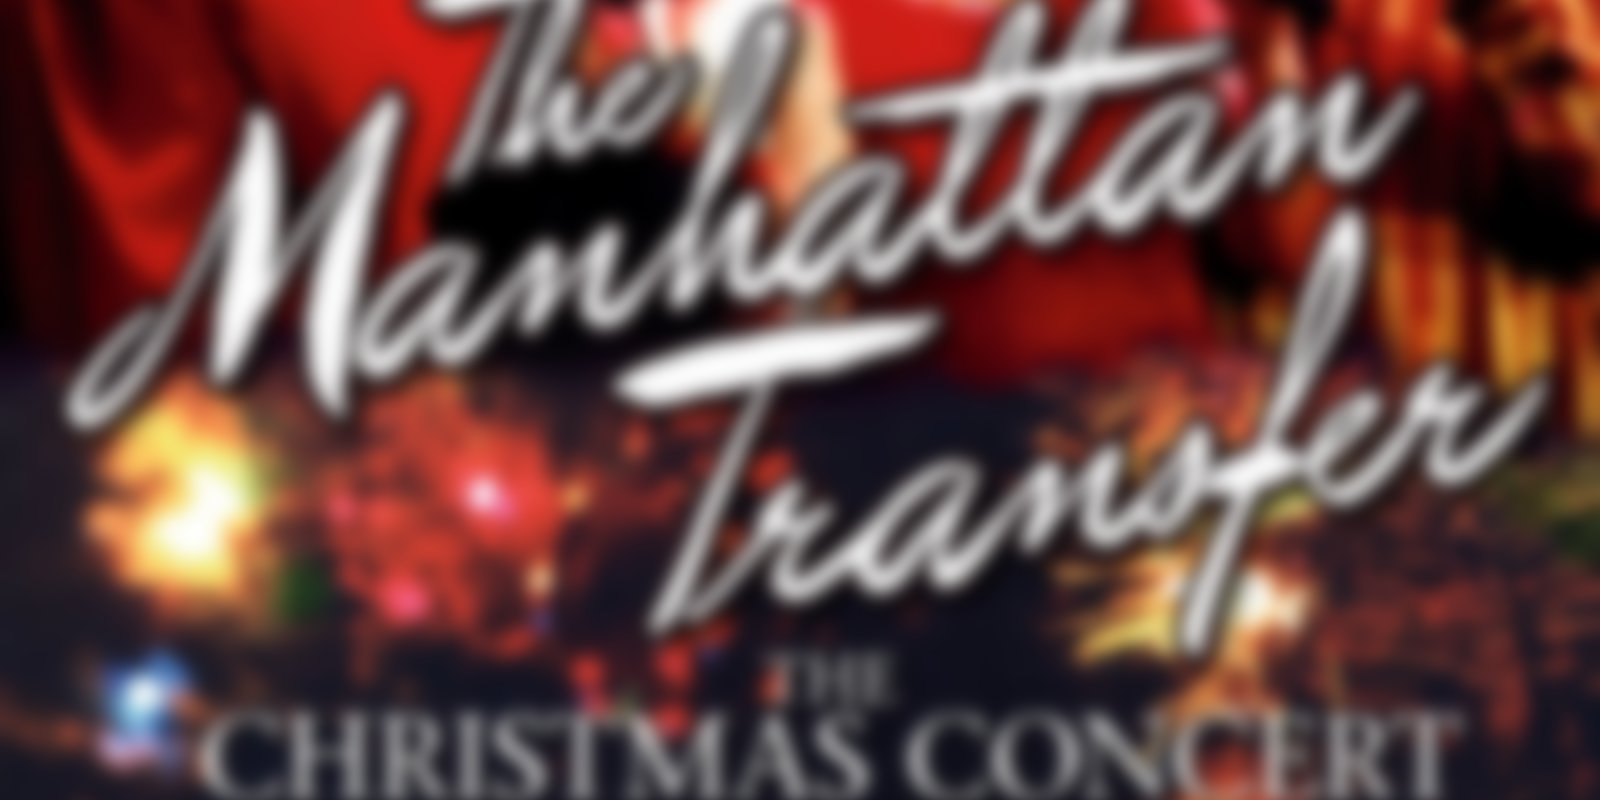 The Manhattan Transfer - The Christmas Concert